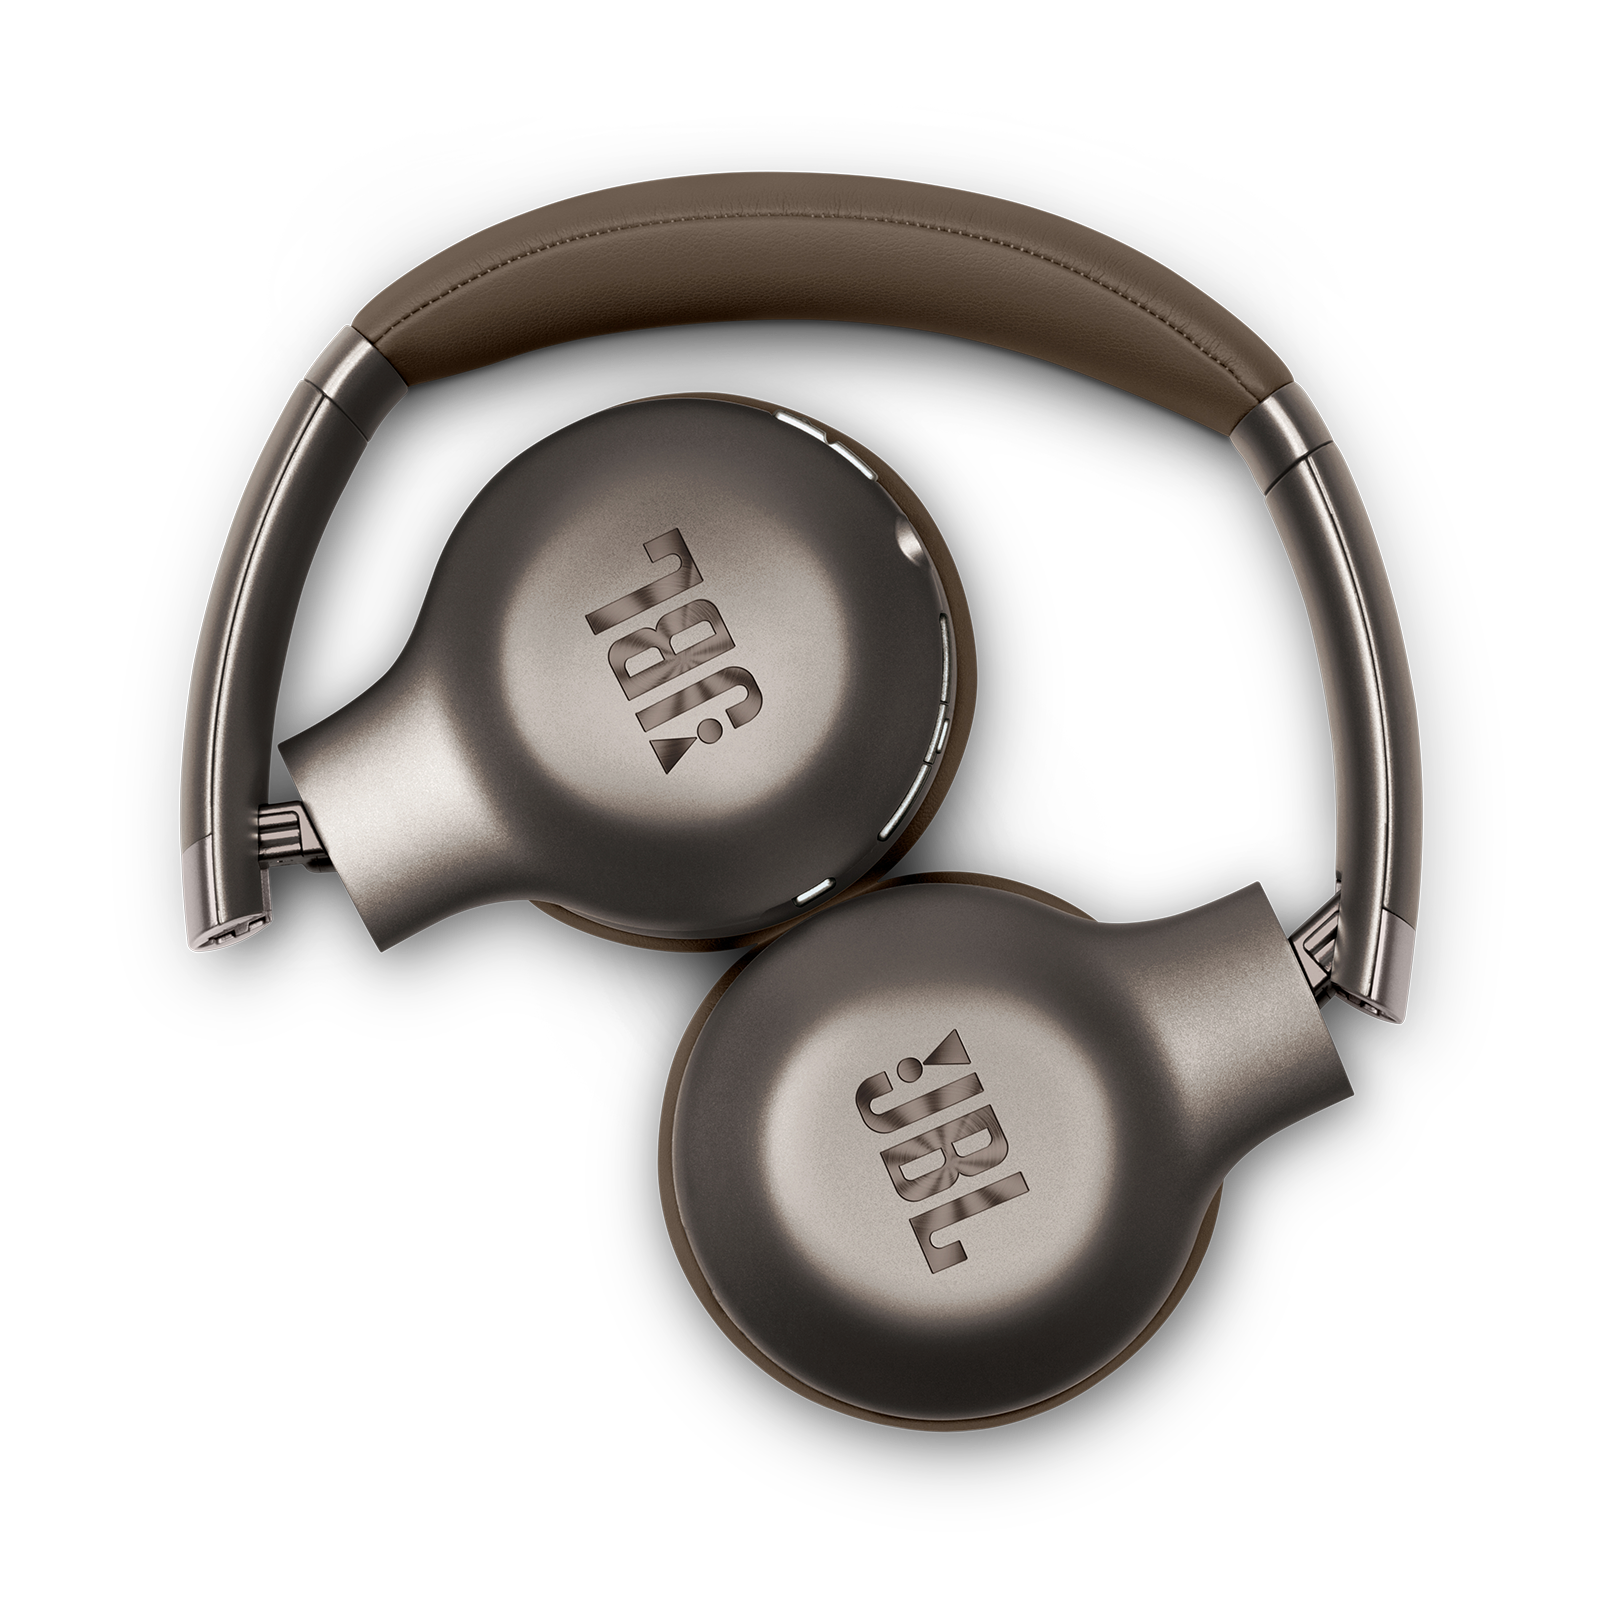 JBL EVEREST™ 310 - Brown - Wireless On-ear headphones - Detailshot 1